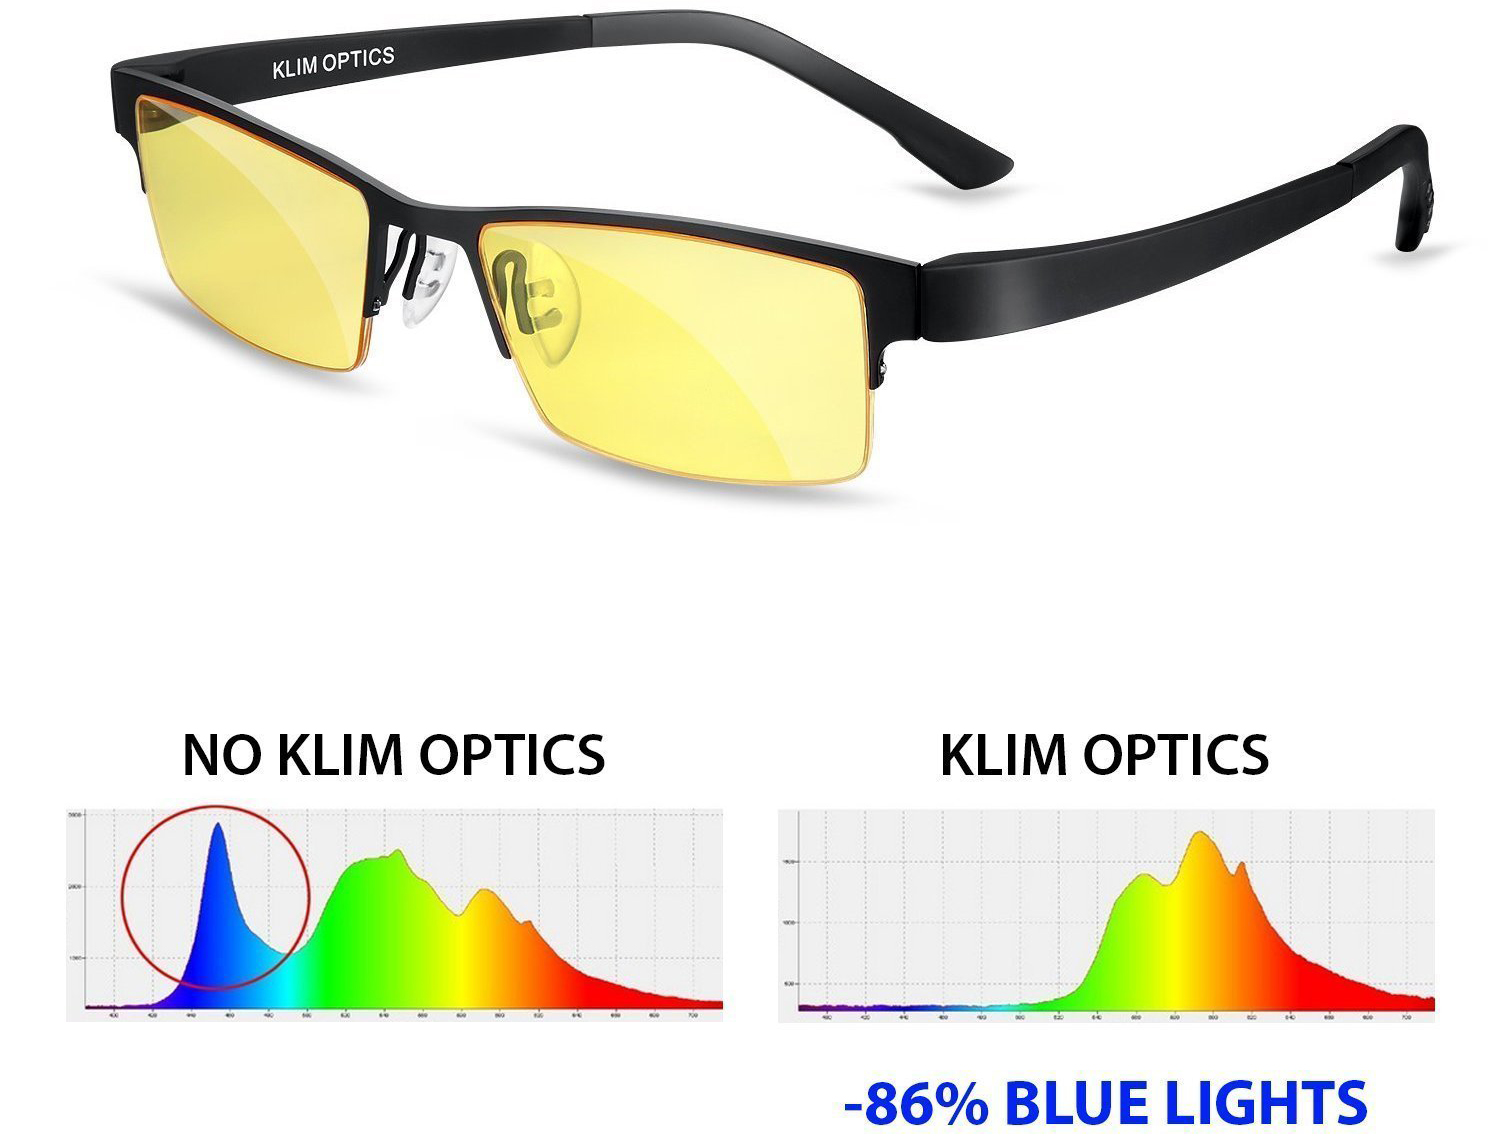 KLIM Optics occhiali per ridurre la luce blu